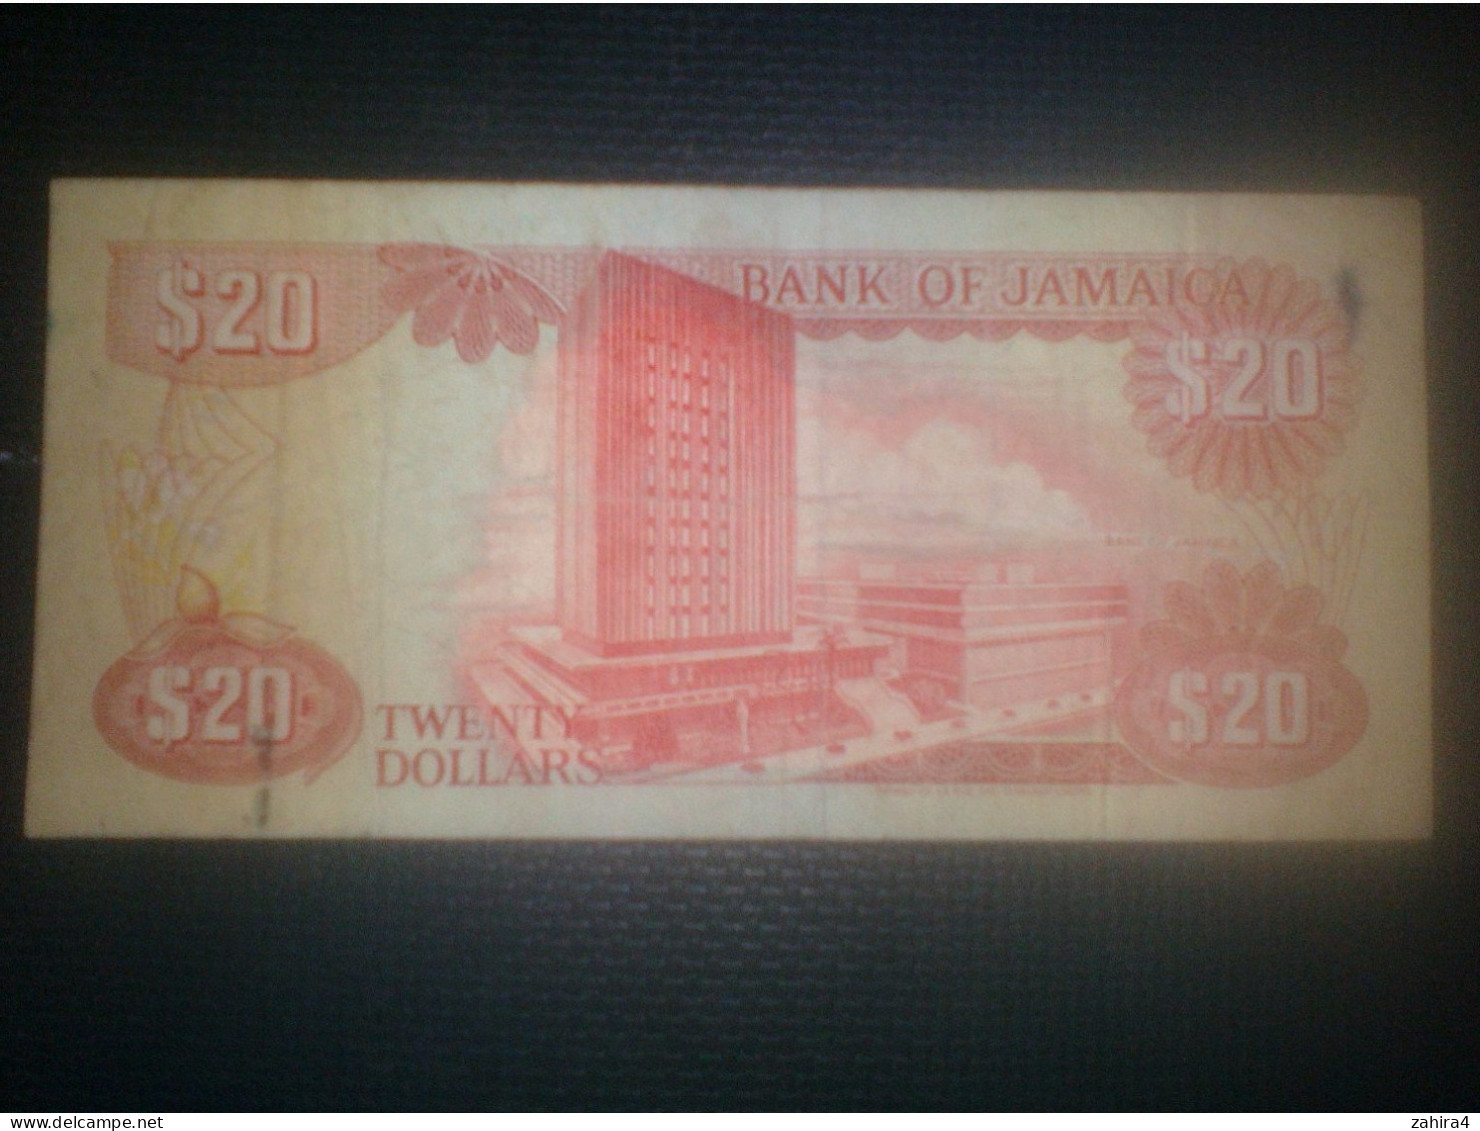 Bank Of Jamaica - 20 - Twenty Dollars - EZ 9193330 - Jamaica